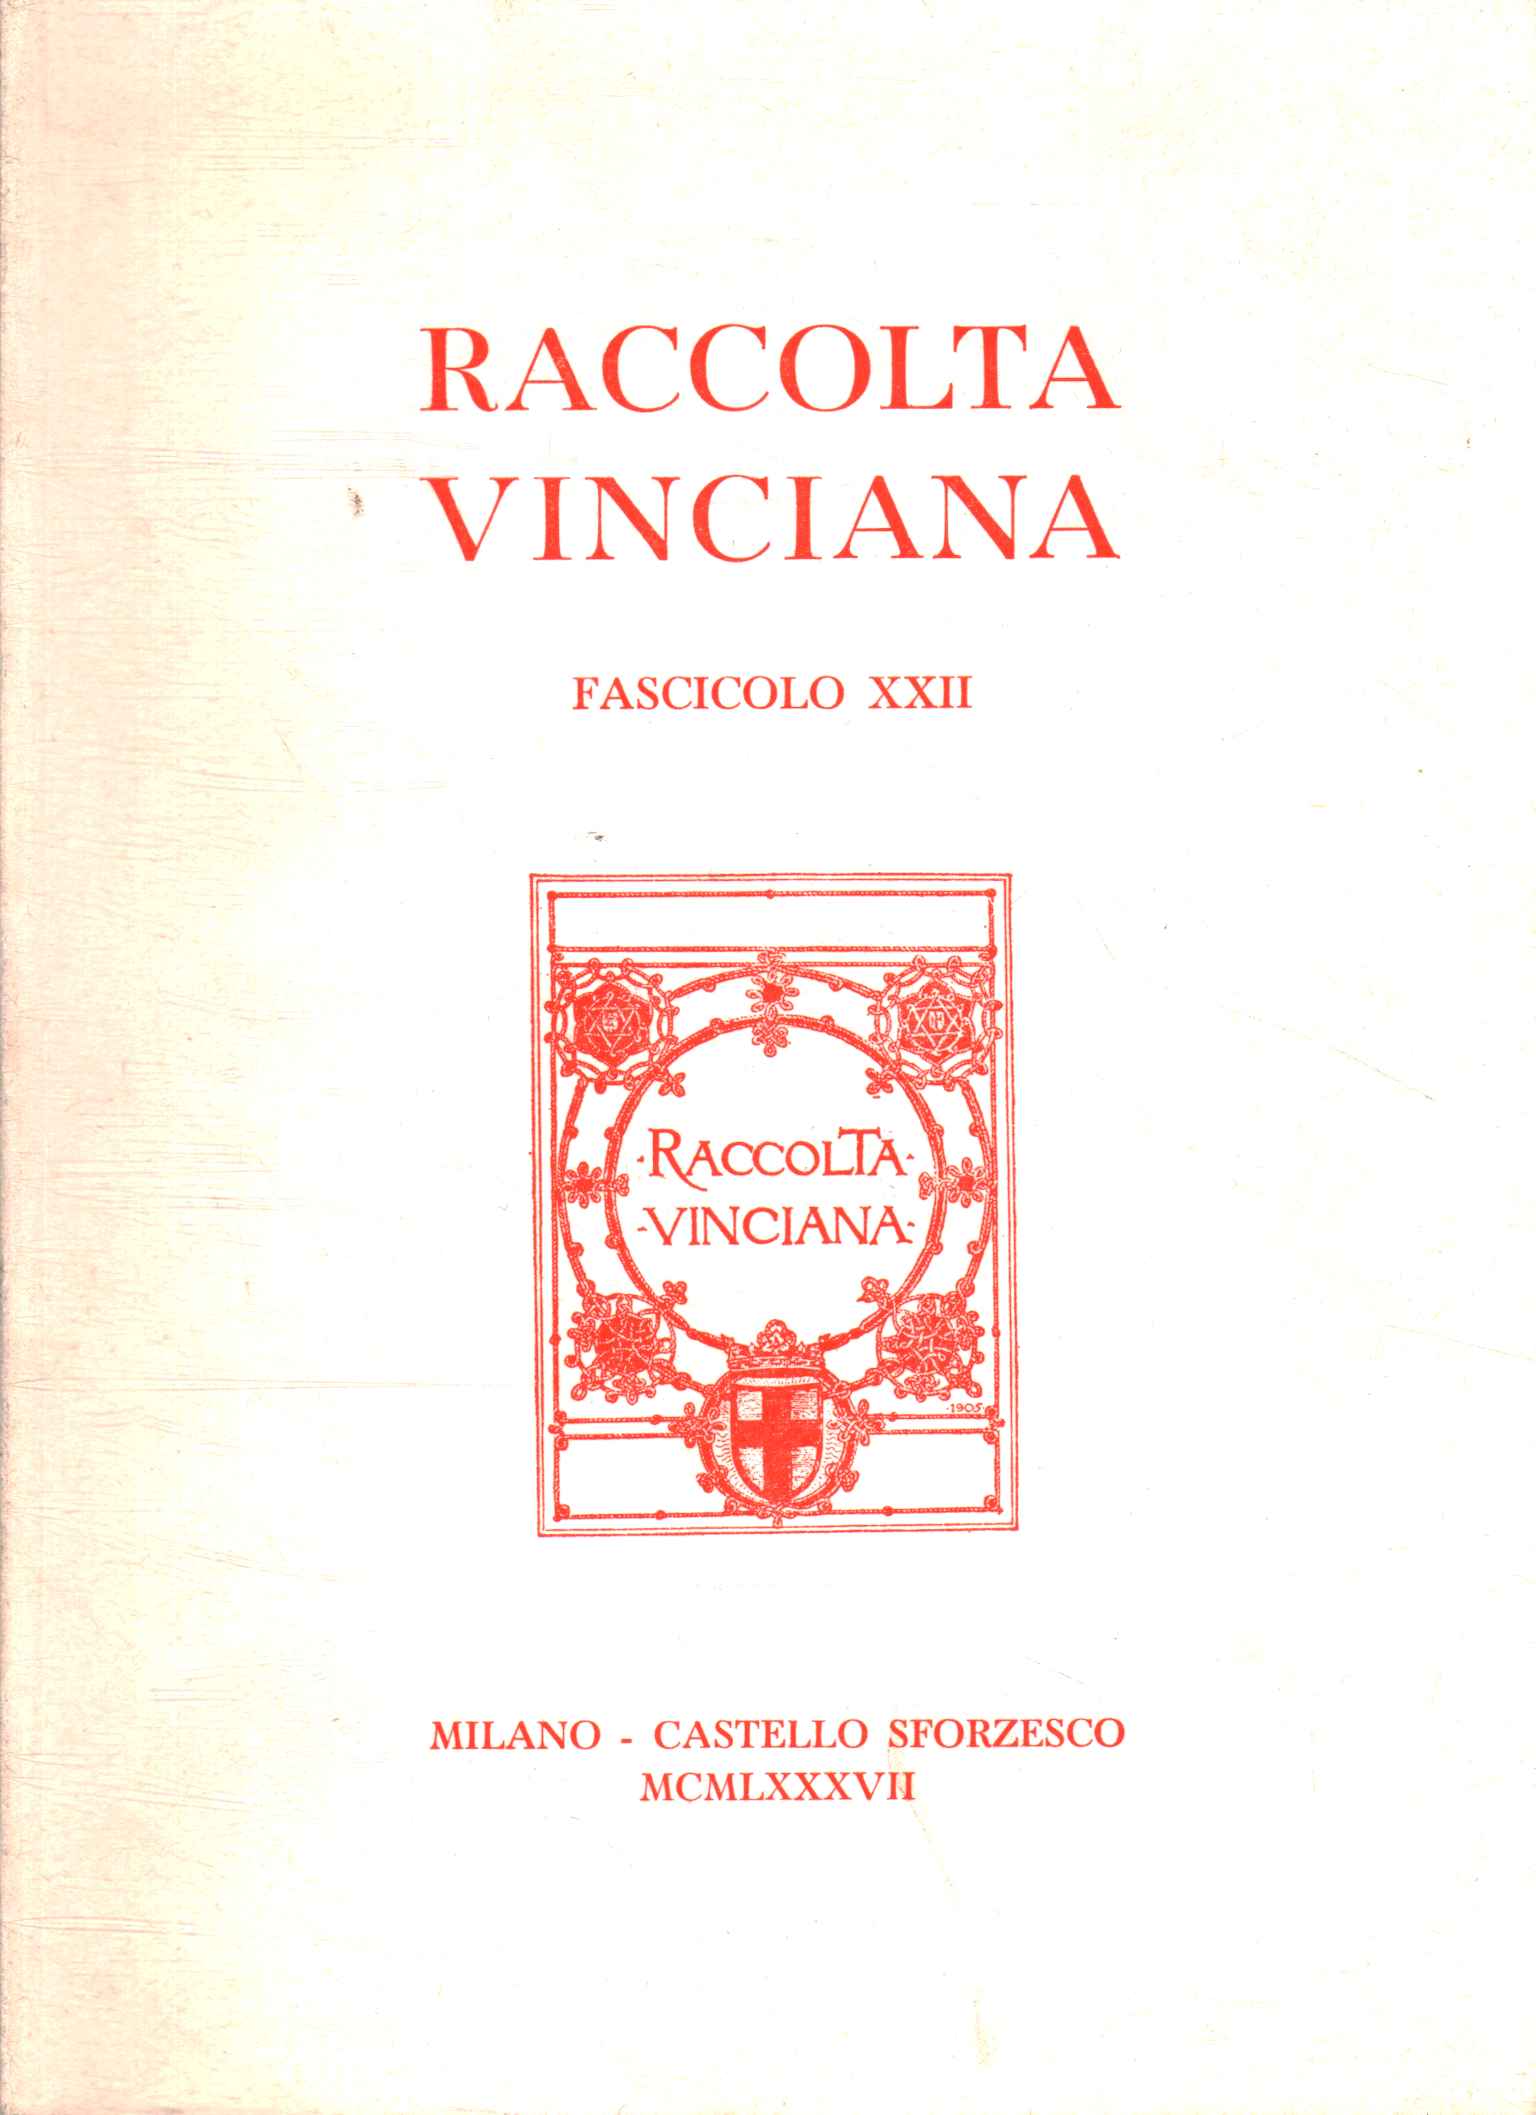 Vinciana Collection Numéro XXII, Vinciana Collection Numéro XXII, Vinciana Collection Numéro XXII, Vinciana Collection Numéro XXII